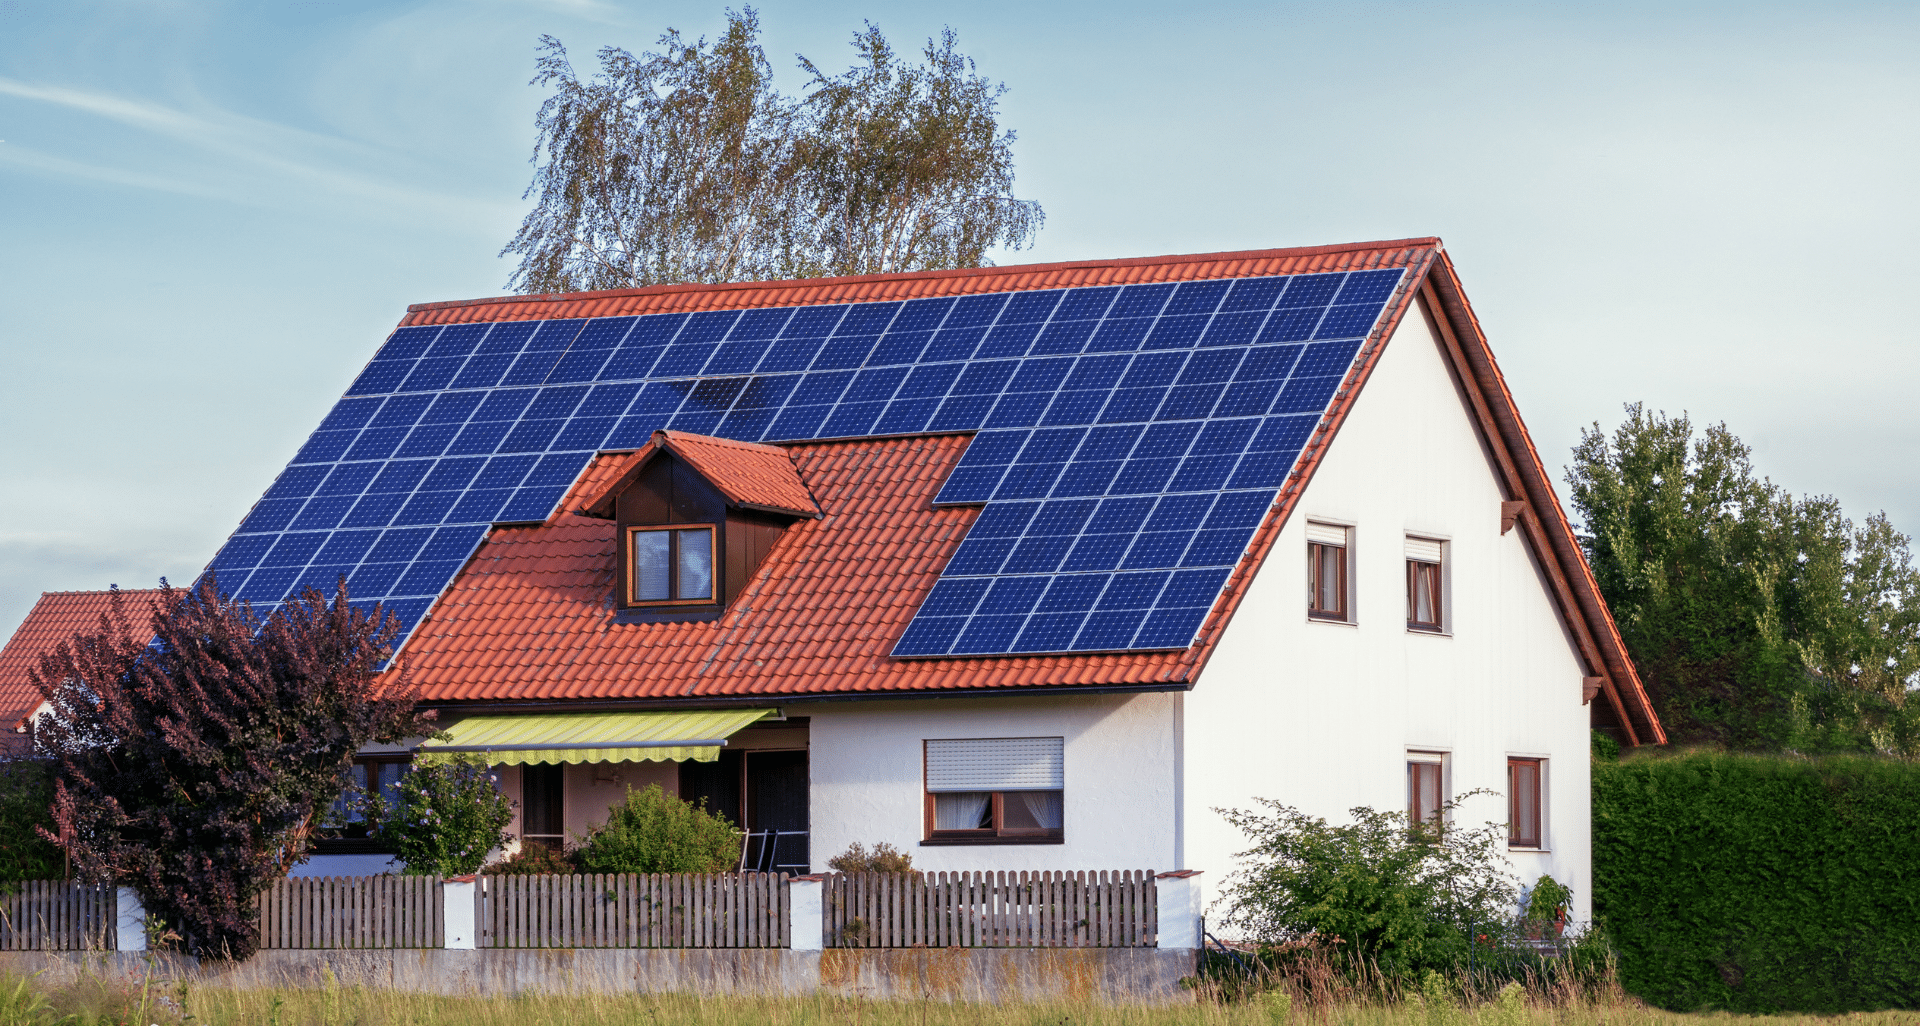 solar panels sales double amid energy crisis